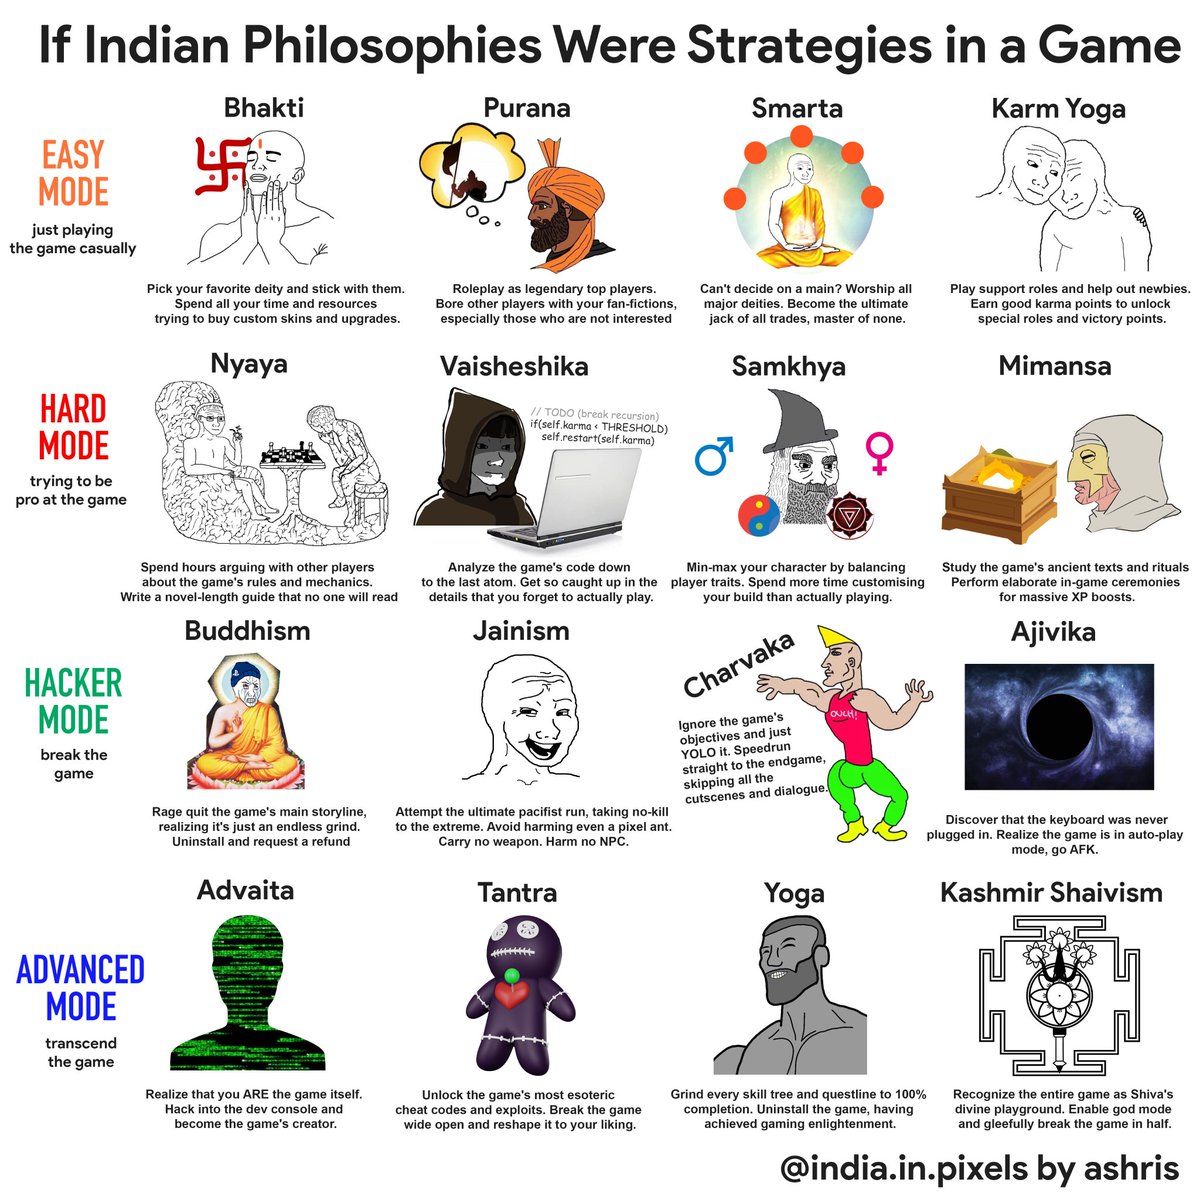 𝑾𝒉𝒂𝒕 𝒊𝒇 𝒉𝒊𝒏𝒅𝒖 𝒑𝒉𝒊𝒍𝒐𝒔𝒐𝒑𝒉𝒊𝒆𝒔 𝒘𝒆𝒓𝒆 𝒔𝒕𝒓𝒂𝒕𝒆𝒈𝒊𝒆𝒔 𝒊𝒏 𝒂 𝒈𝒂𝒎𝒆: [📷: indiainpixels] #Philosophy #Game #Advaita